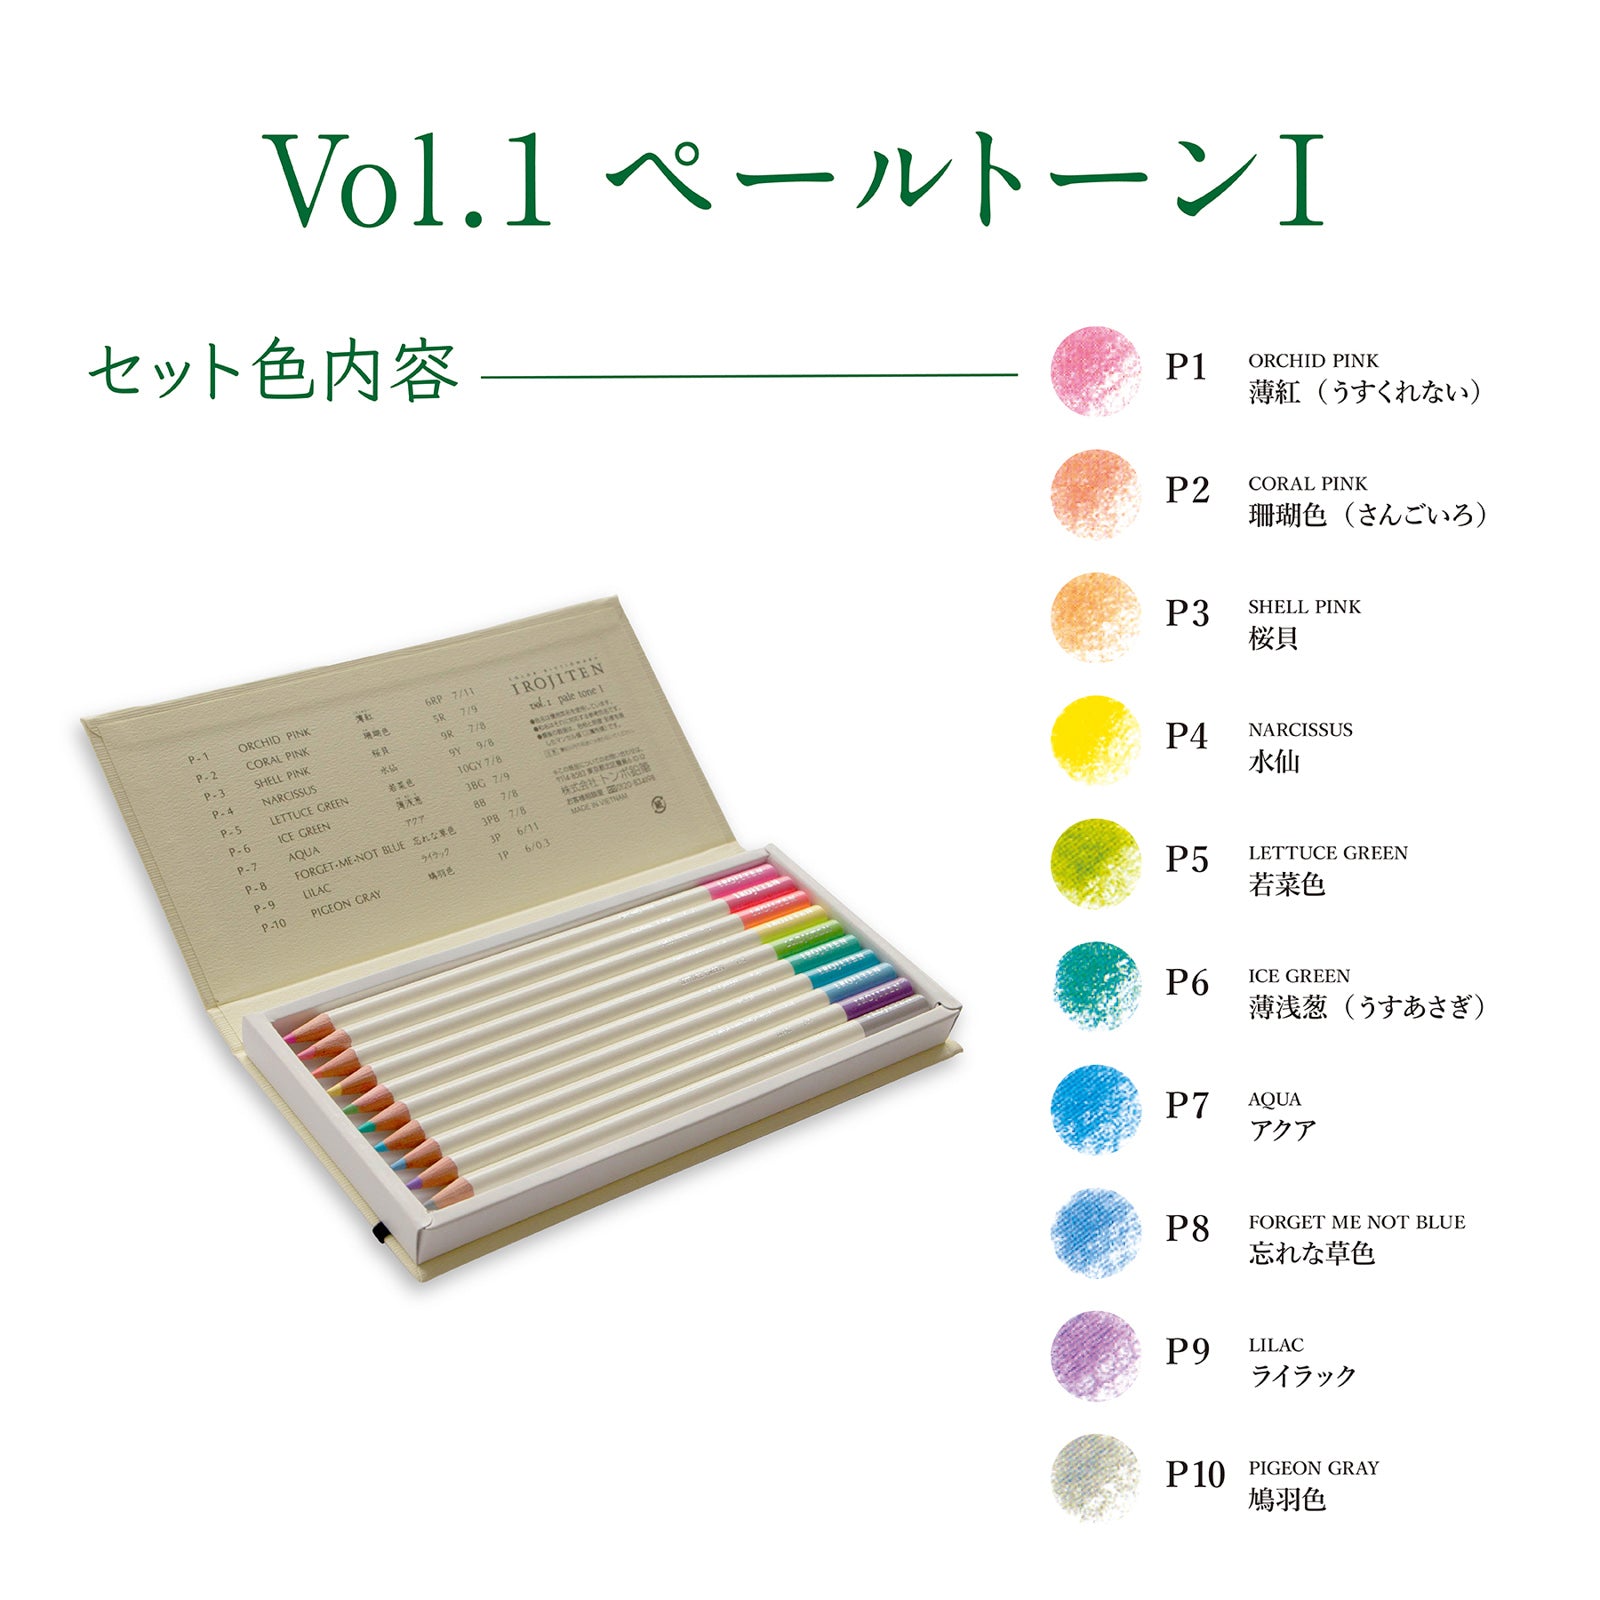 Tombow Irojiten set volume 1: Pale tone l10 colors